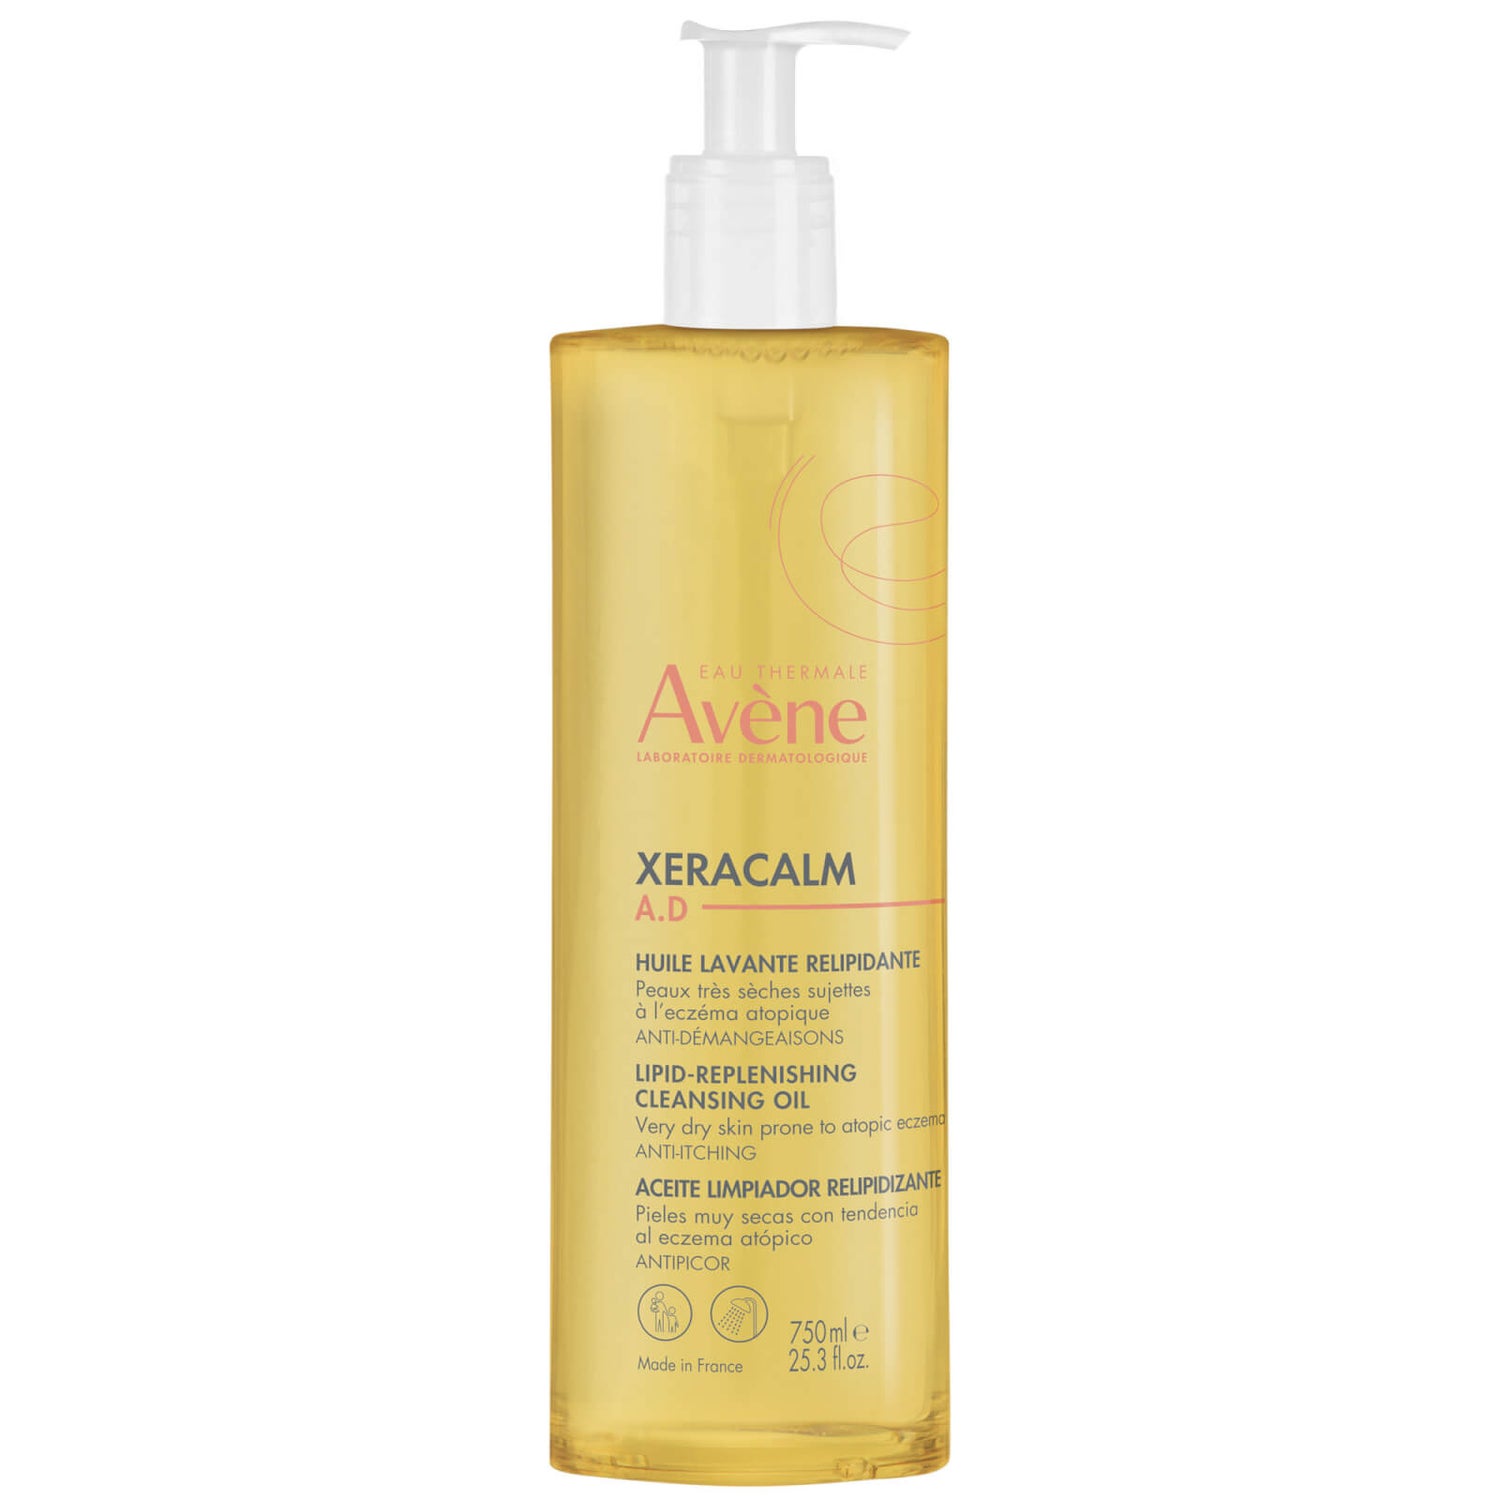 Avène XeraCalm A.D Lipid-Replenishing Cleansing Oil (25.3 oz.)